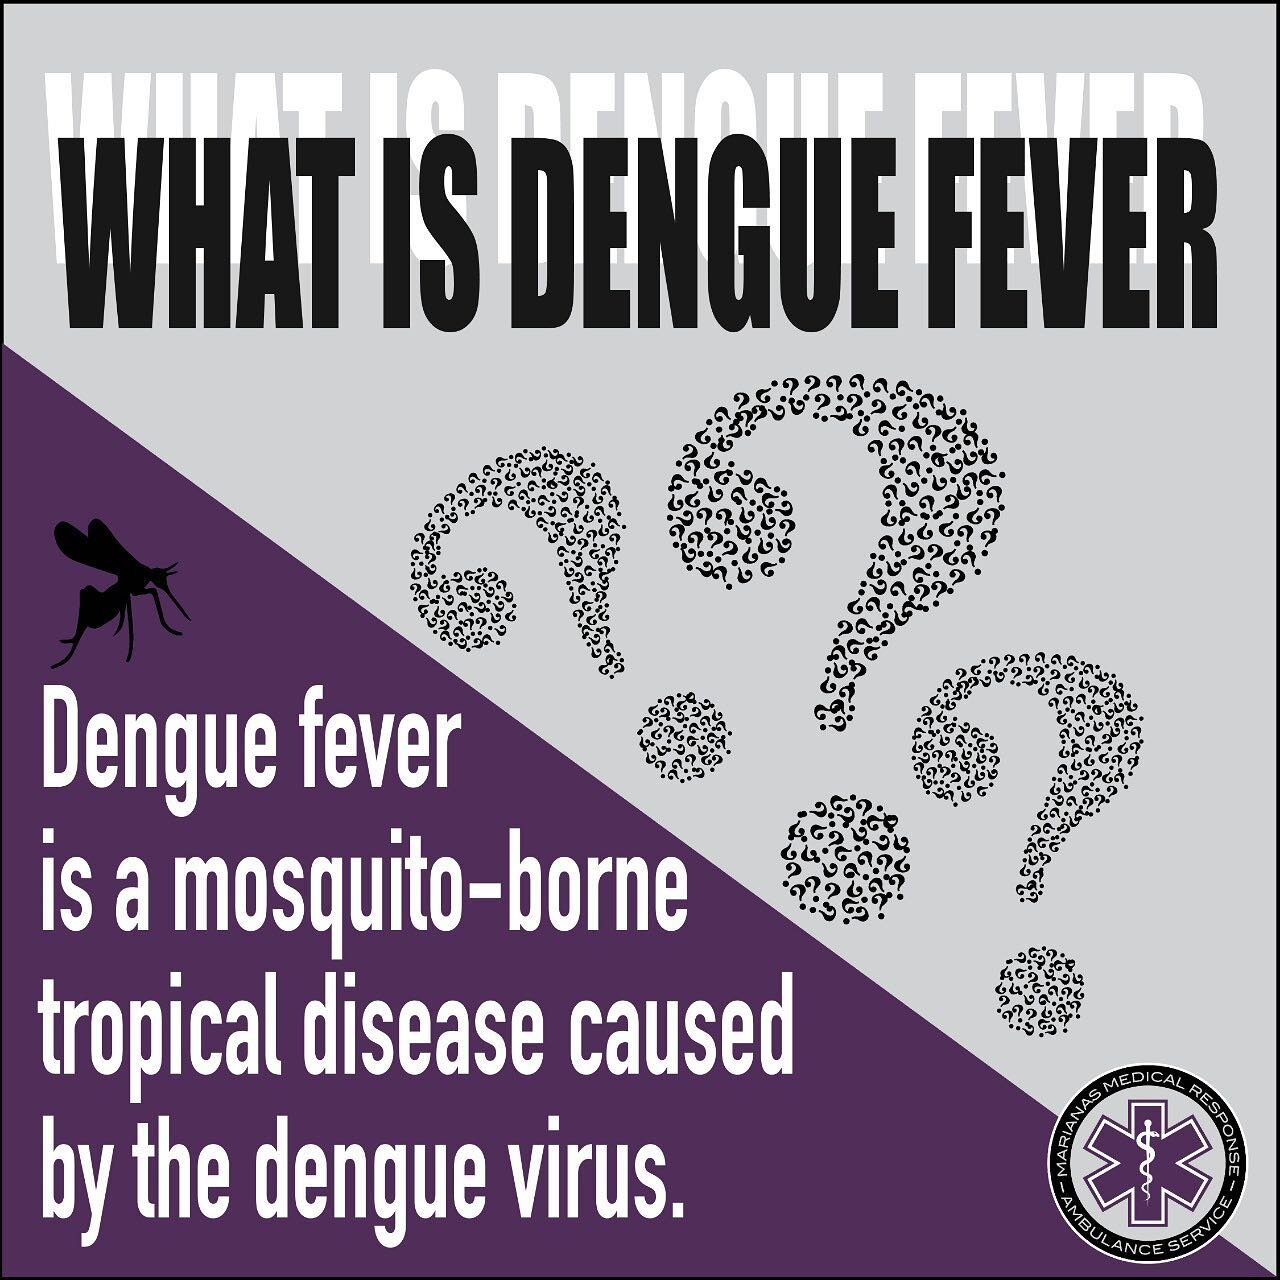 Fight the bite! Be aware and stay safe Guam. 
SWIPE ➡️
#dengue #denguefever #fightthebite #mmrguam #guam